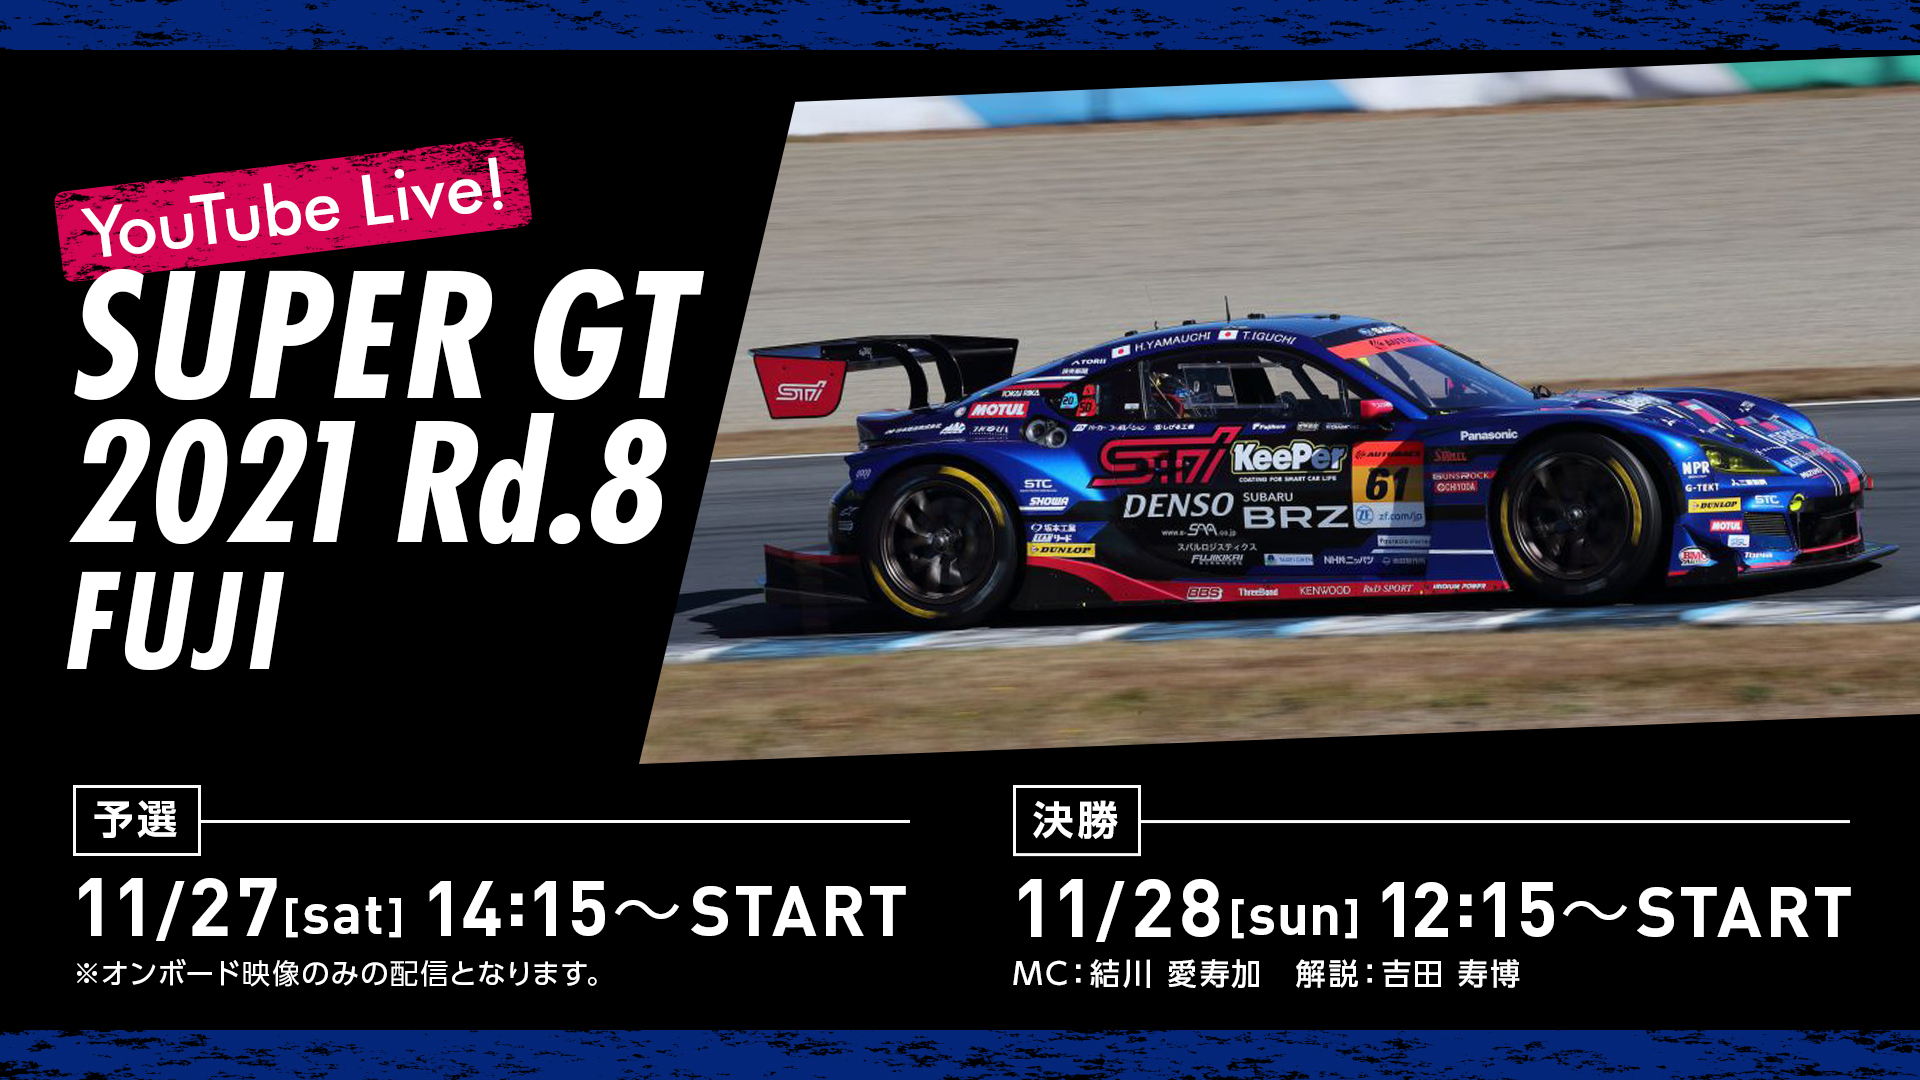 Super Gt Rd 8 富士もlive配信と現地ブース出展を実施 Subaru Sti Motorsport 公式モータースポーツサイト